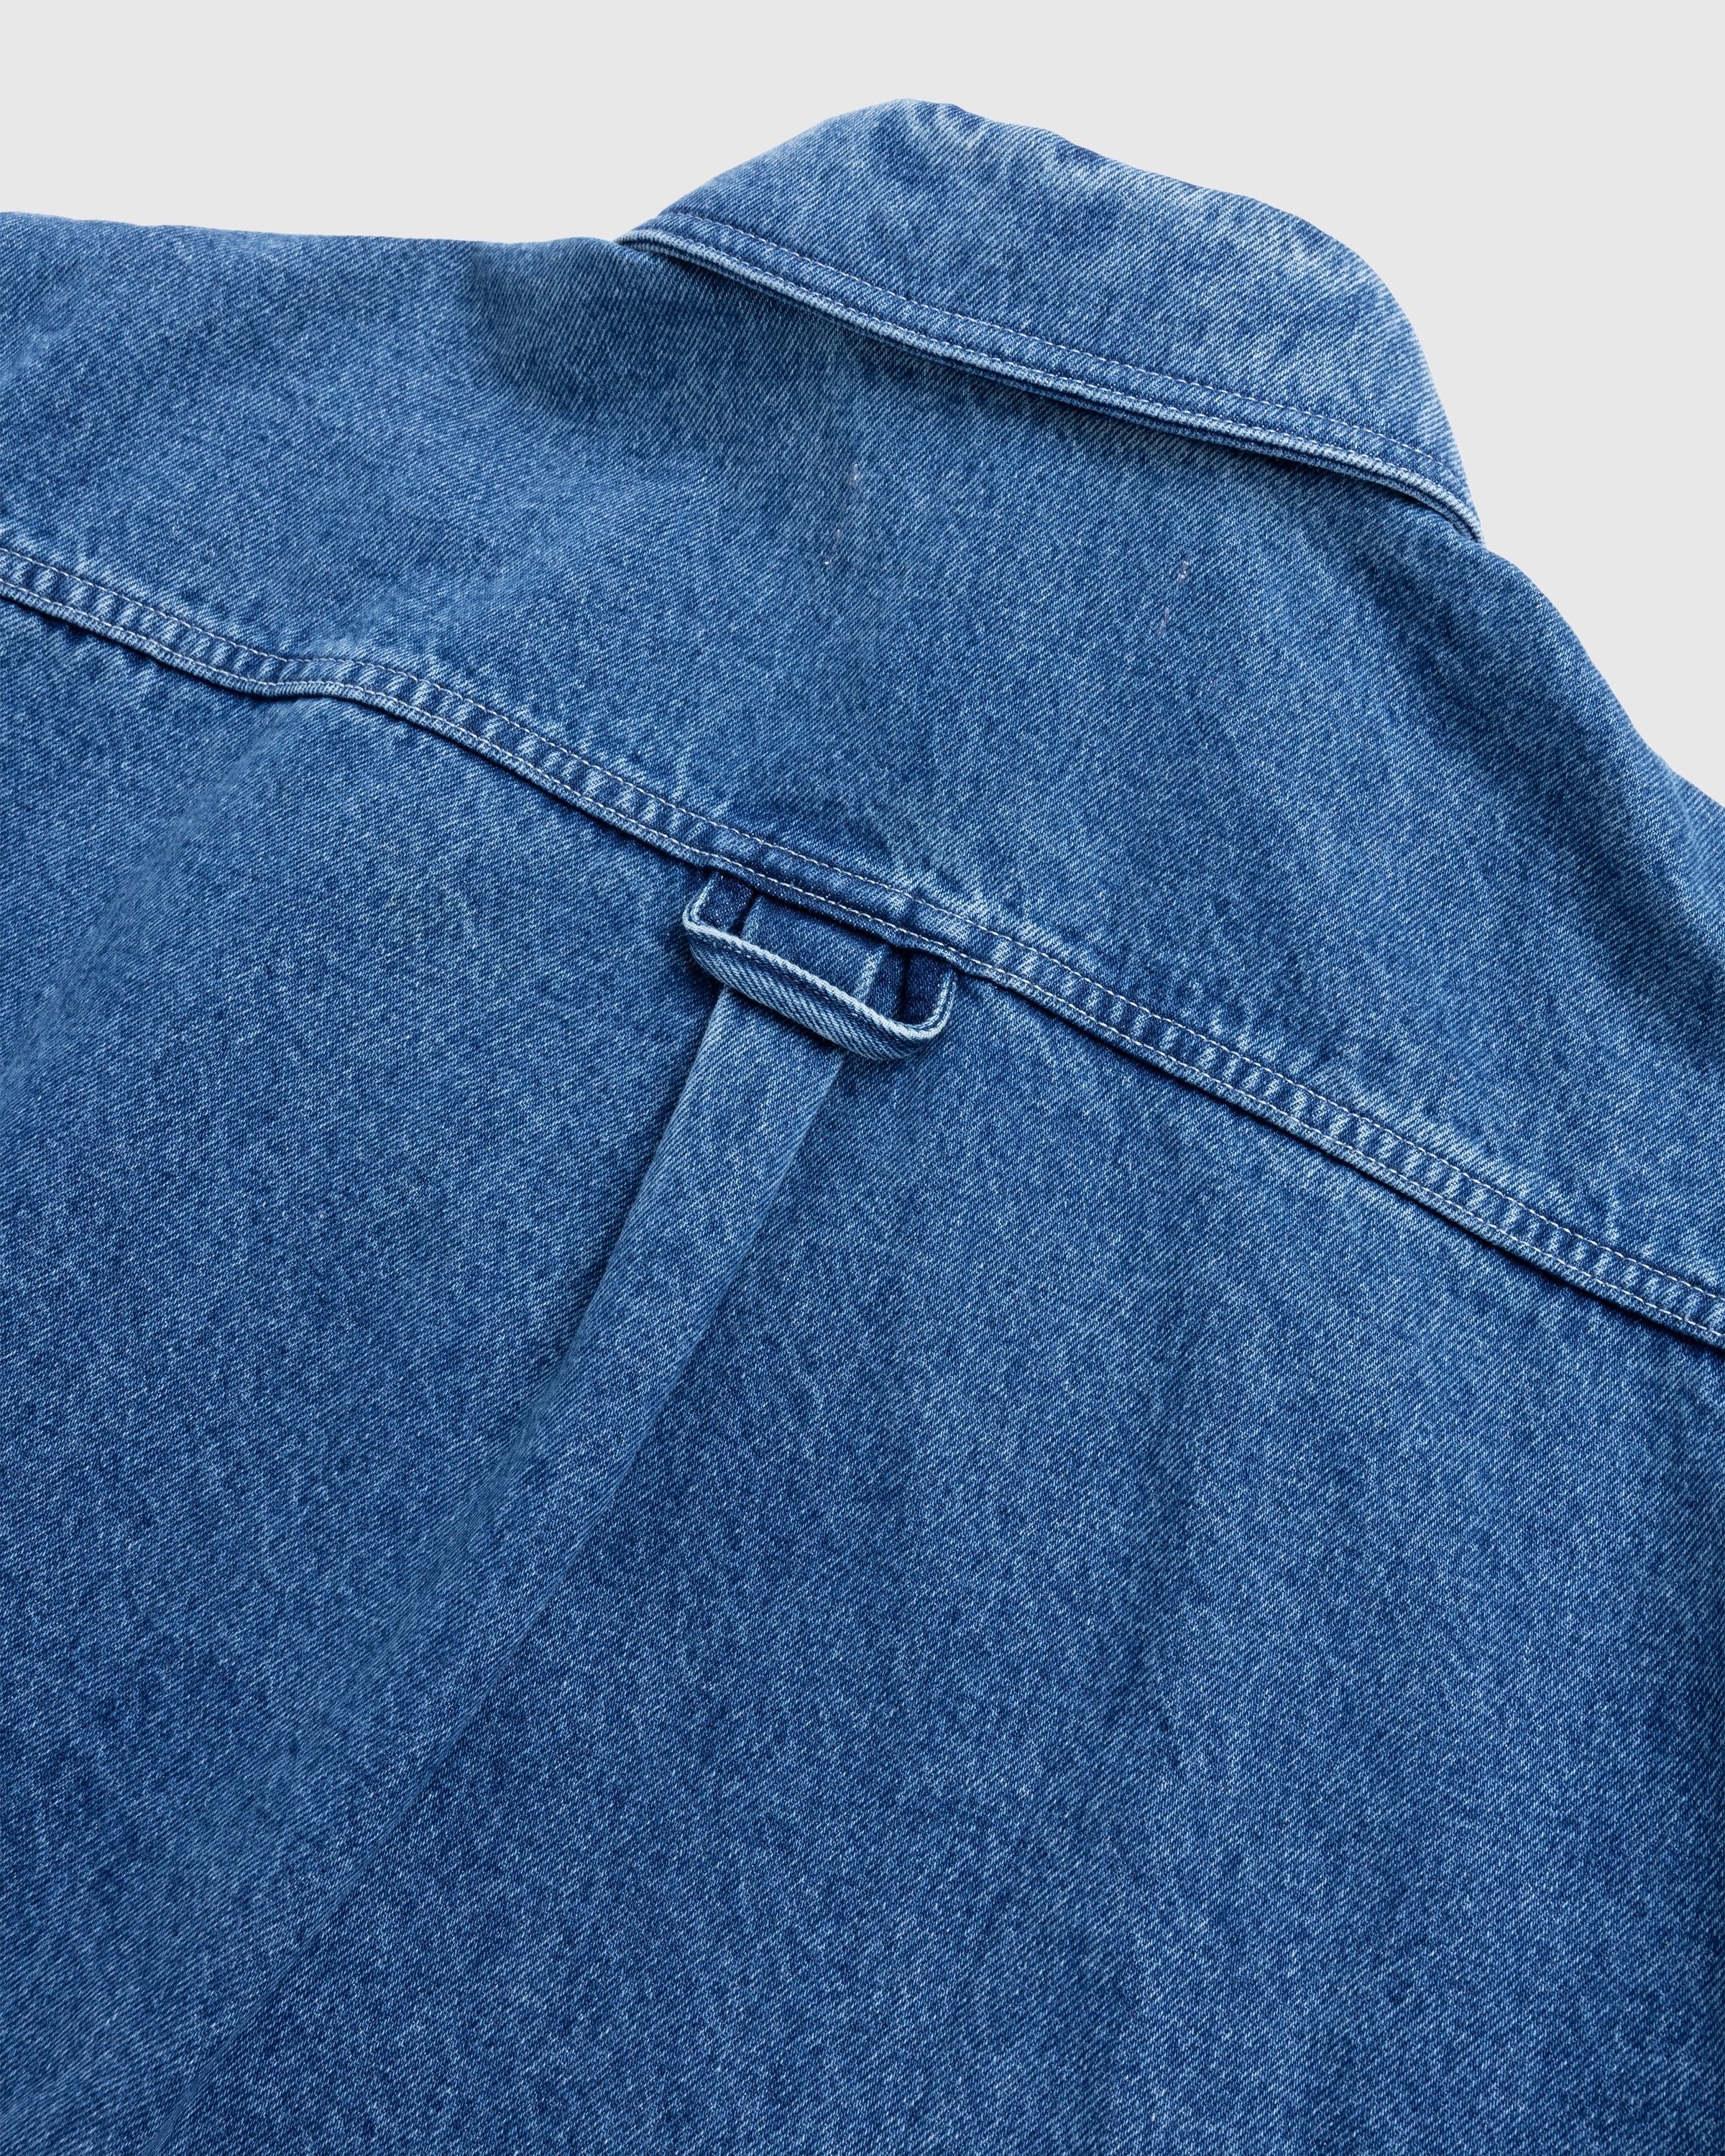 Y/Project – Classic Button Panel Navy Denim | Shirt Shop Highsnobiety